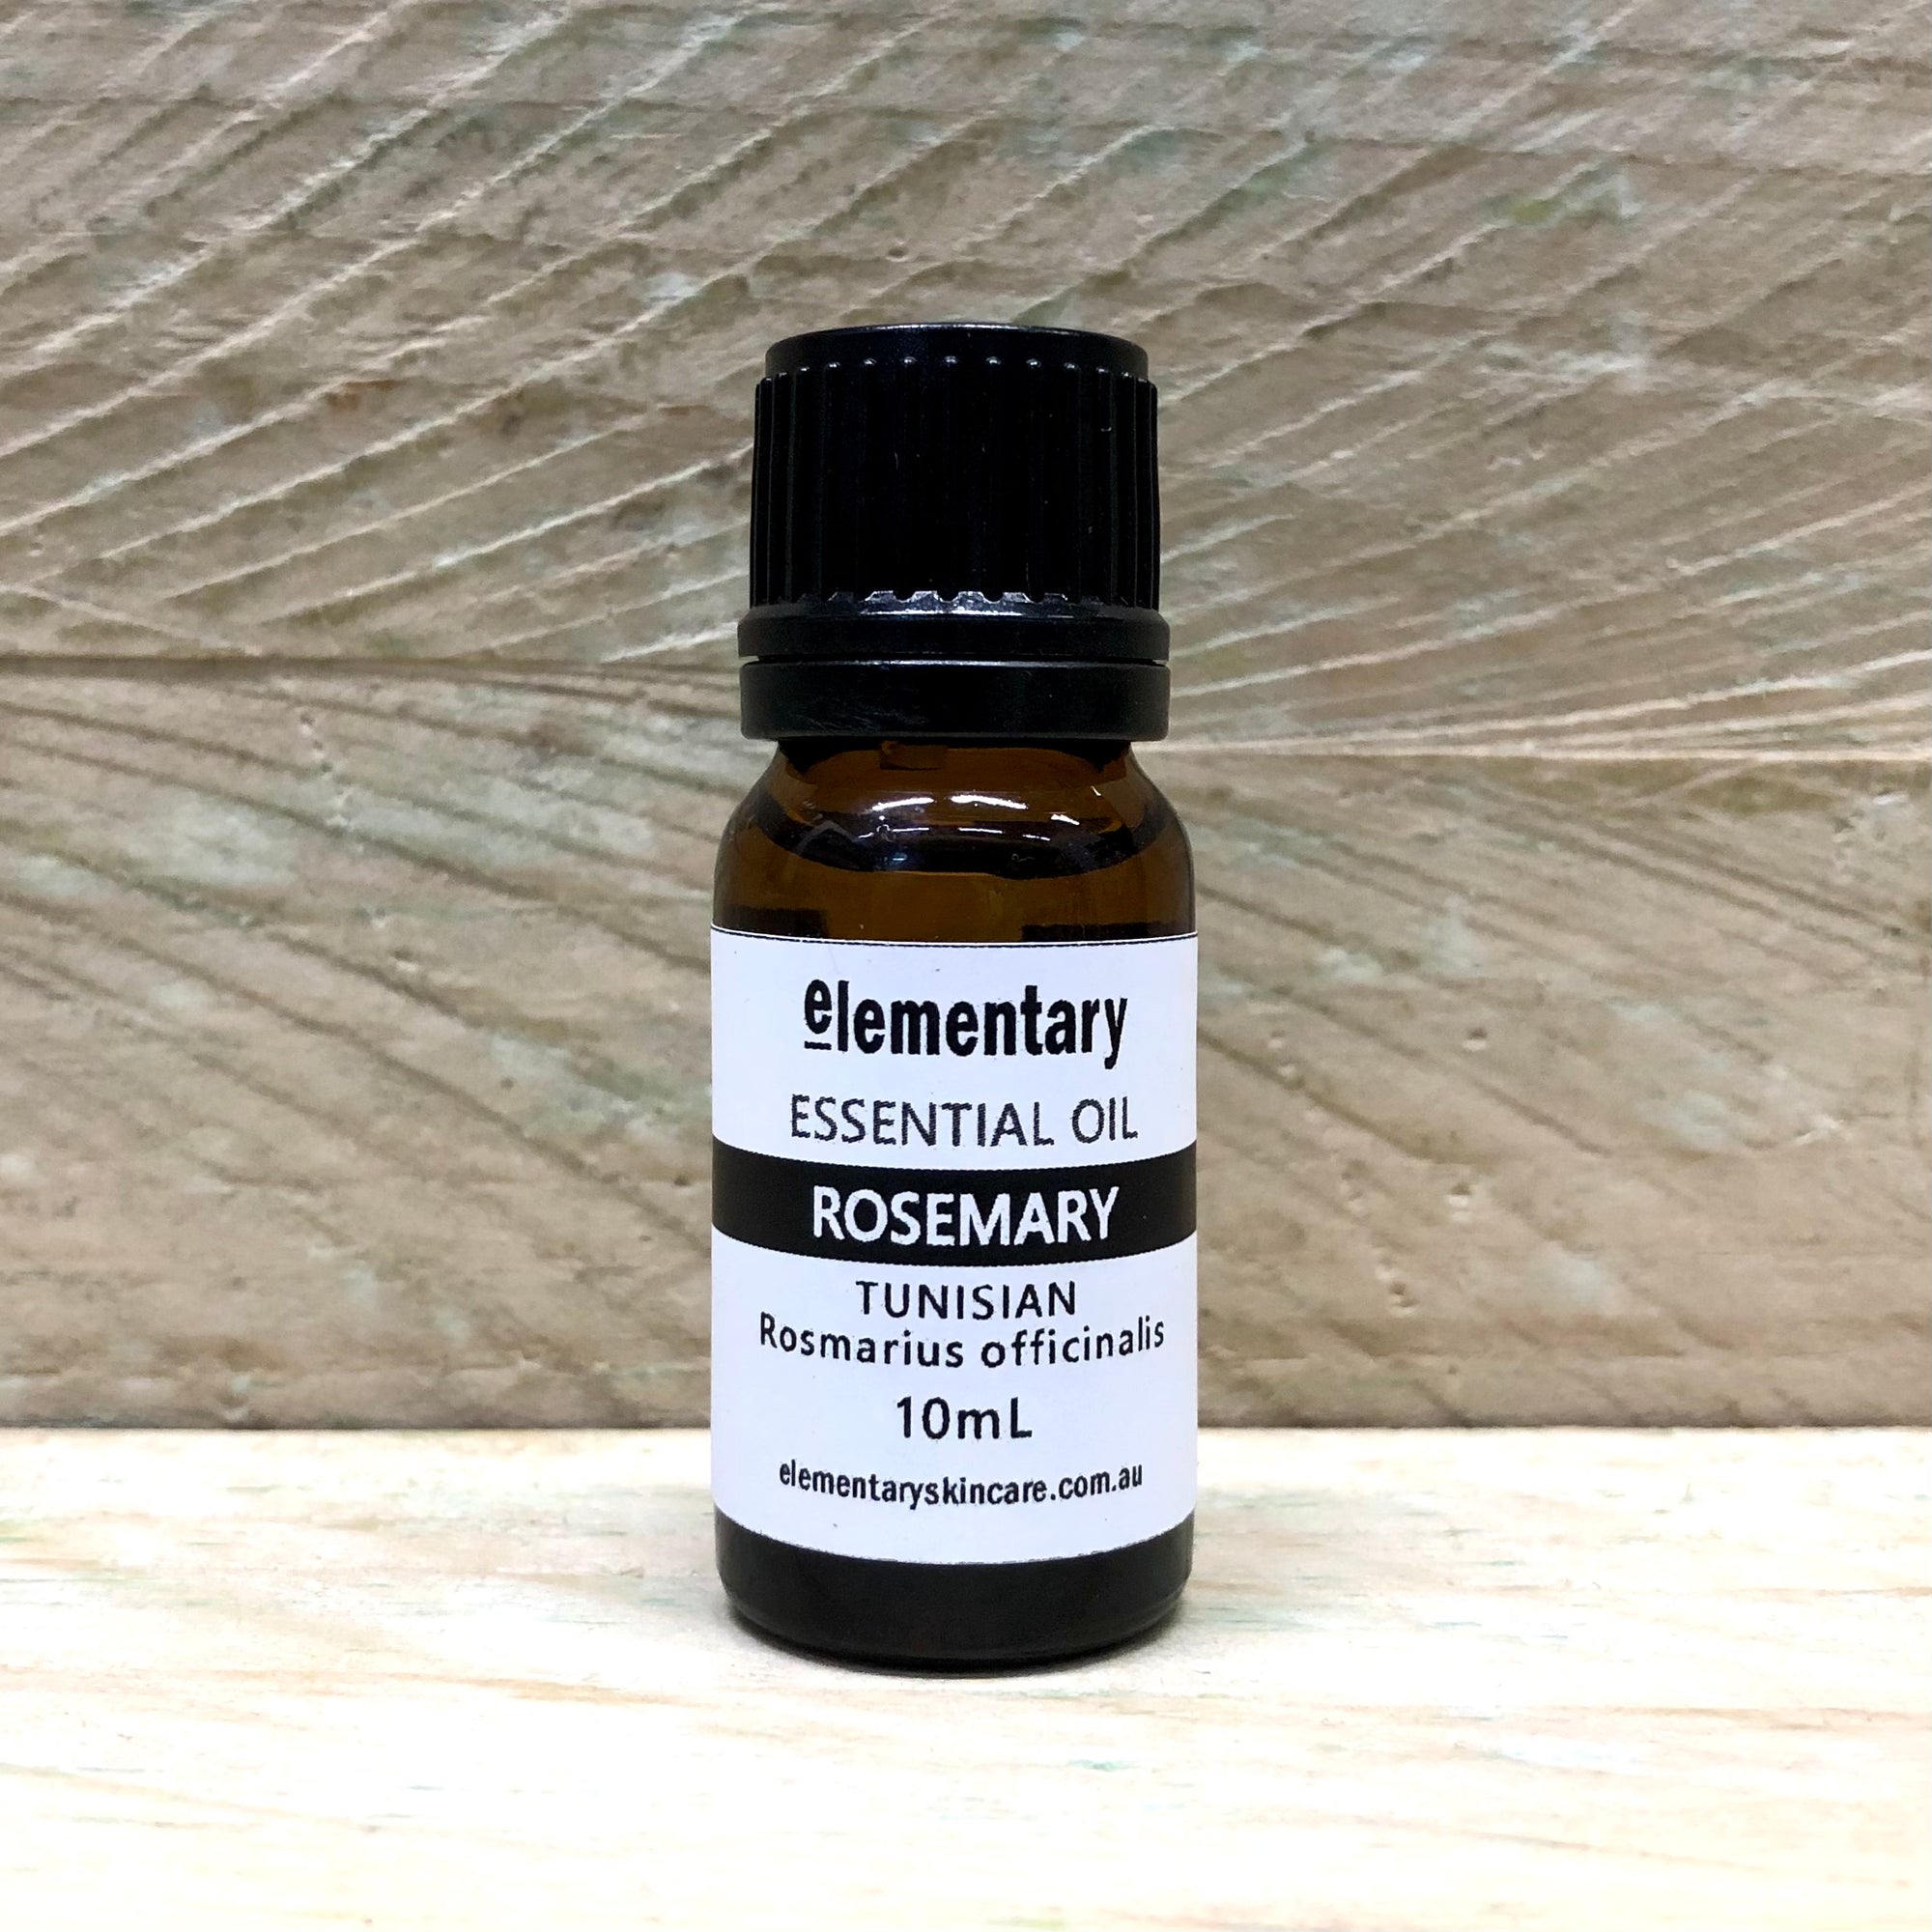 Elementary essential oil Rosemary